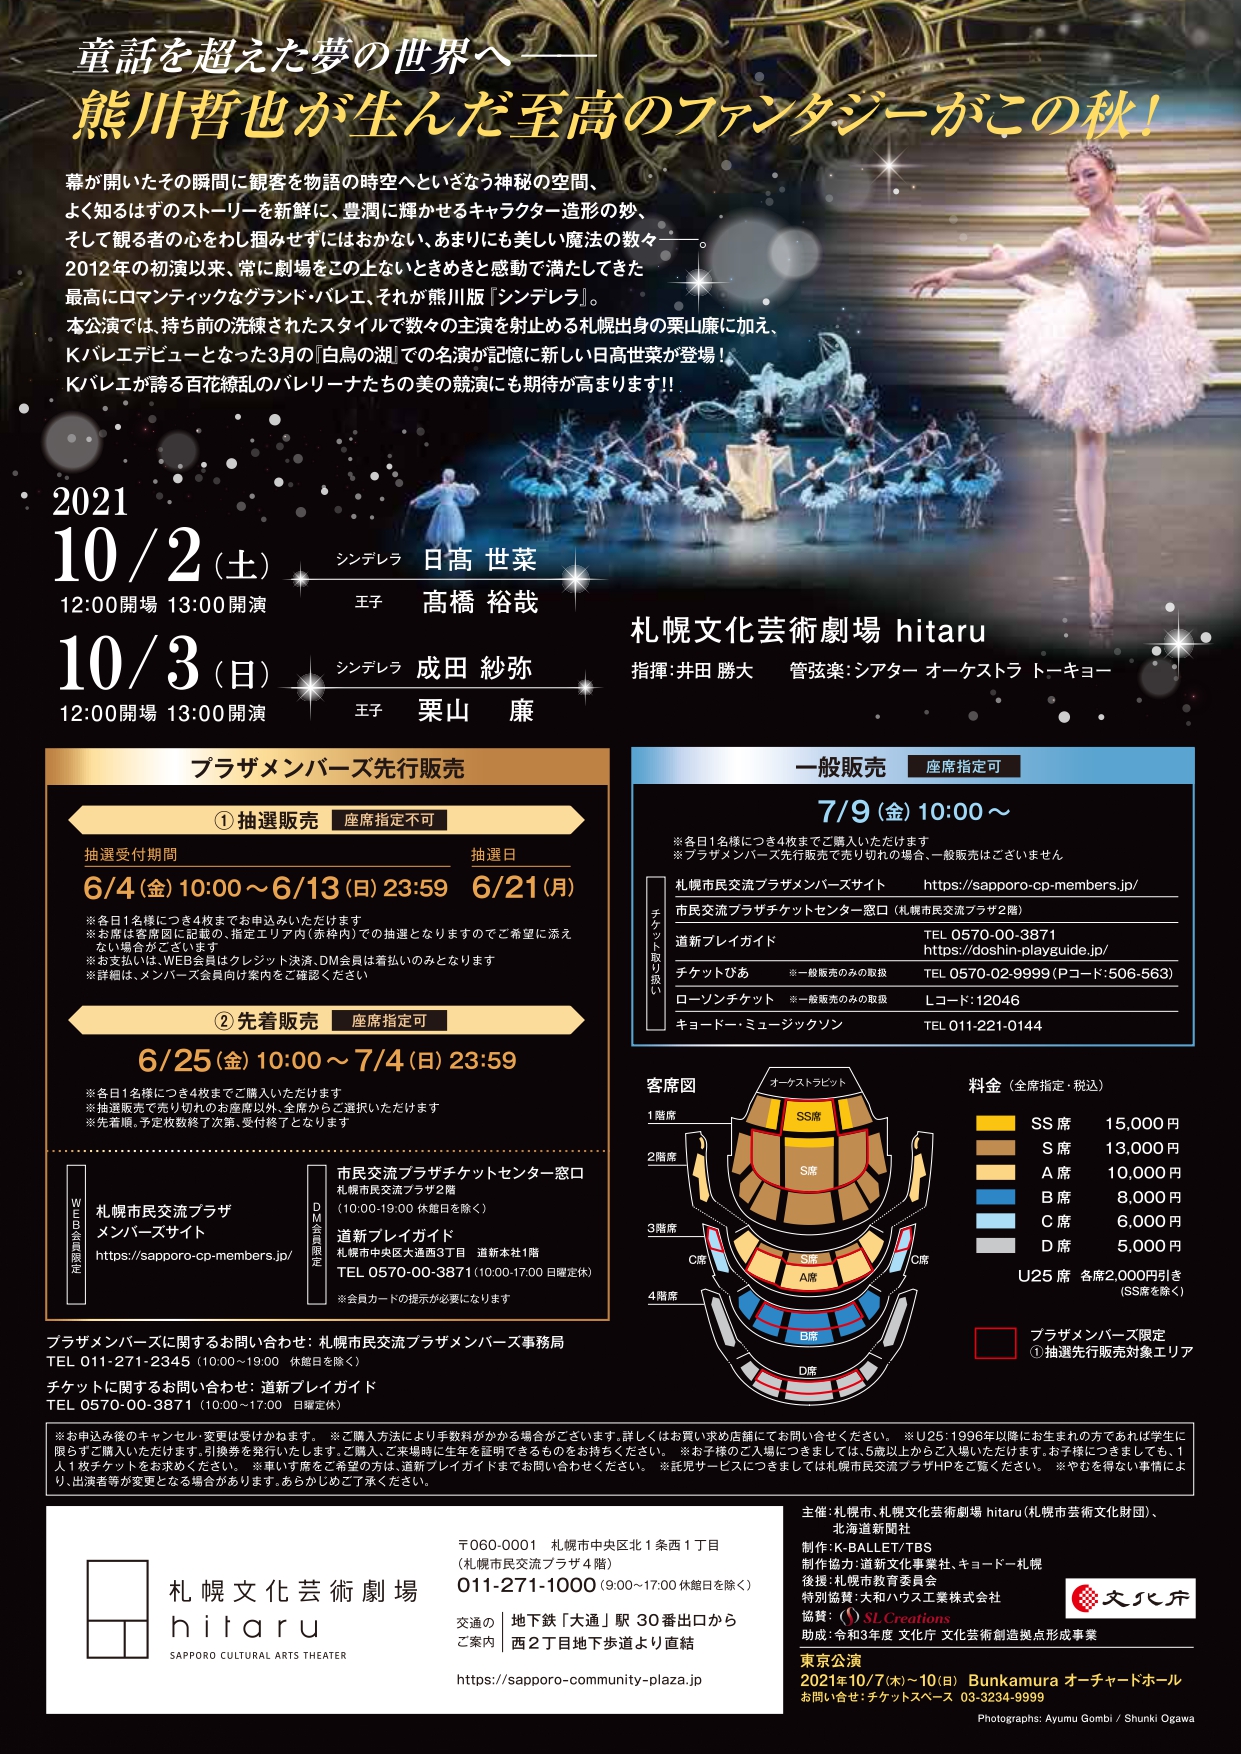 PLAZA FESTIVAL 2021 Daiwa House® PRESENTS 熊川哲也 Kバレエ カンパニー  Autumn Tour 2021 「シンデレラ」 イメージ2枚目